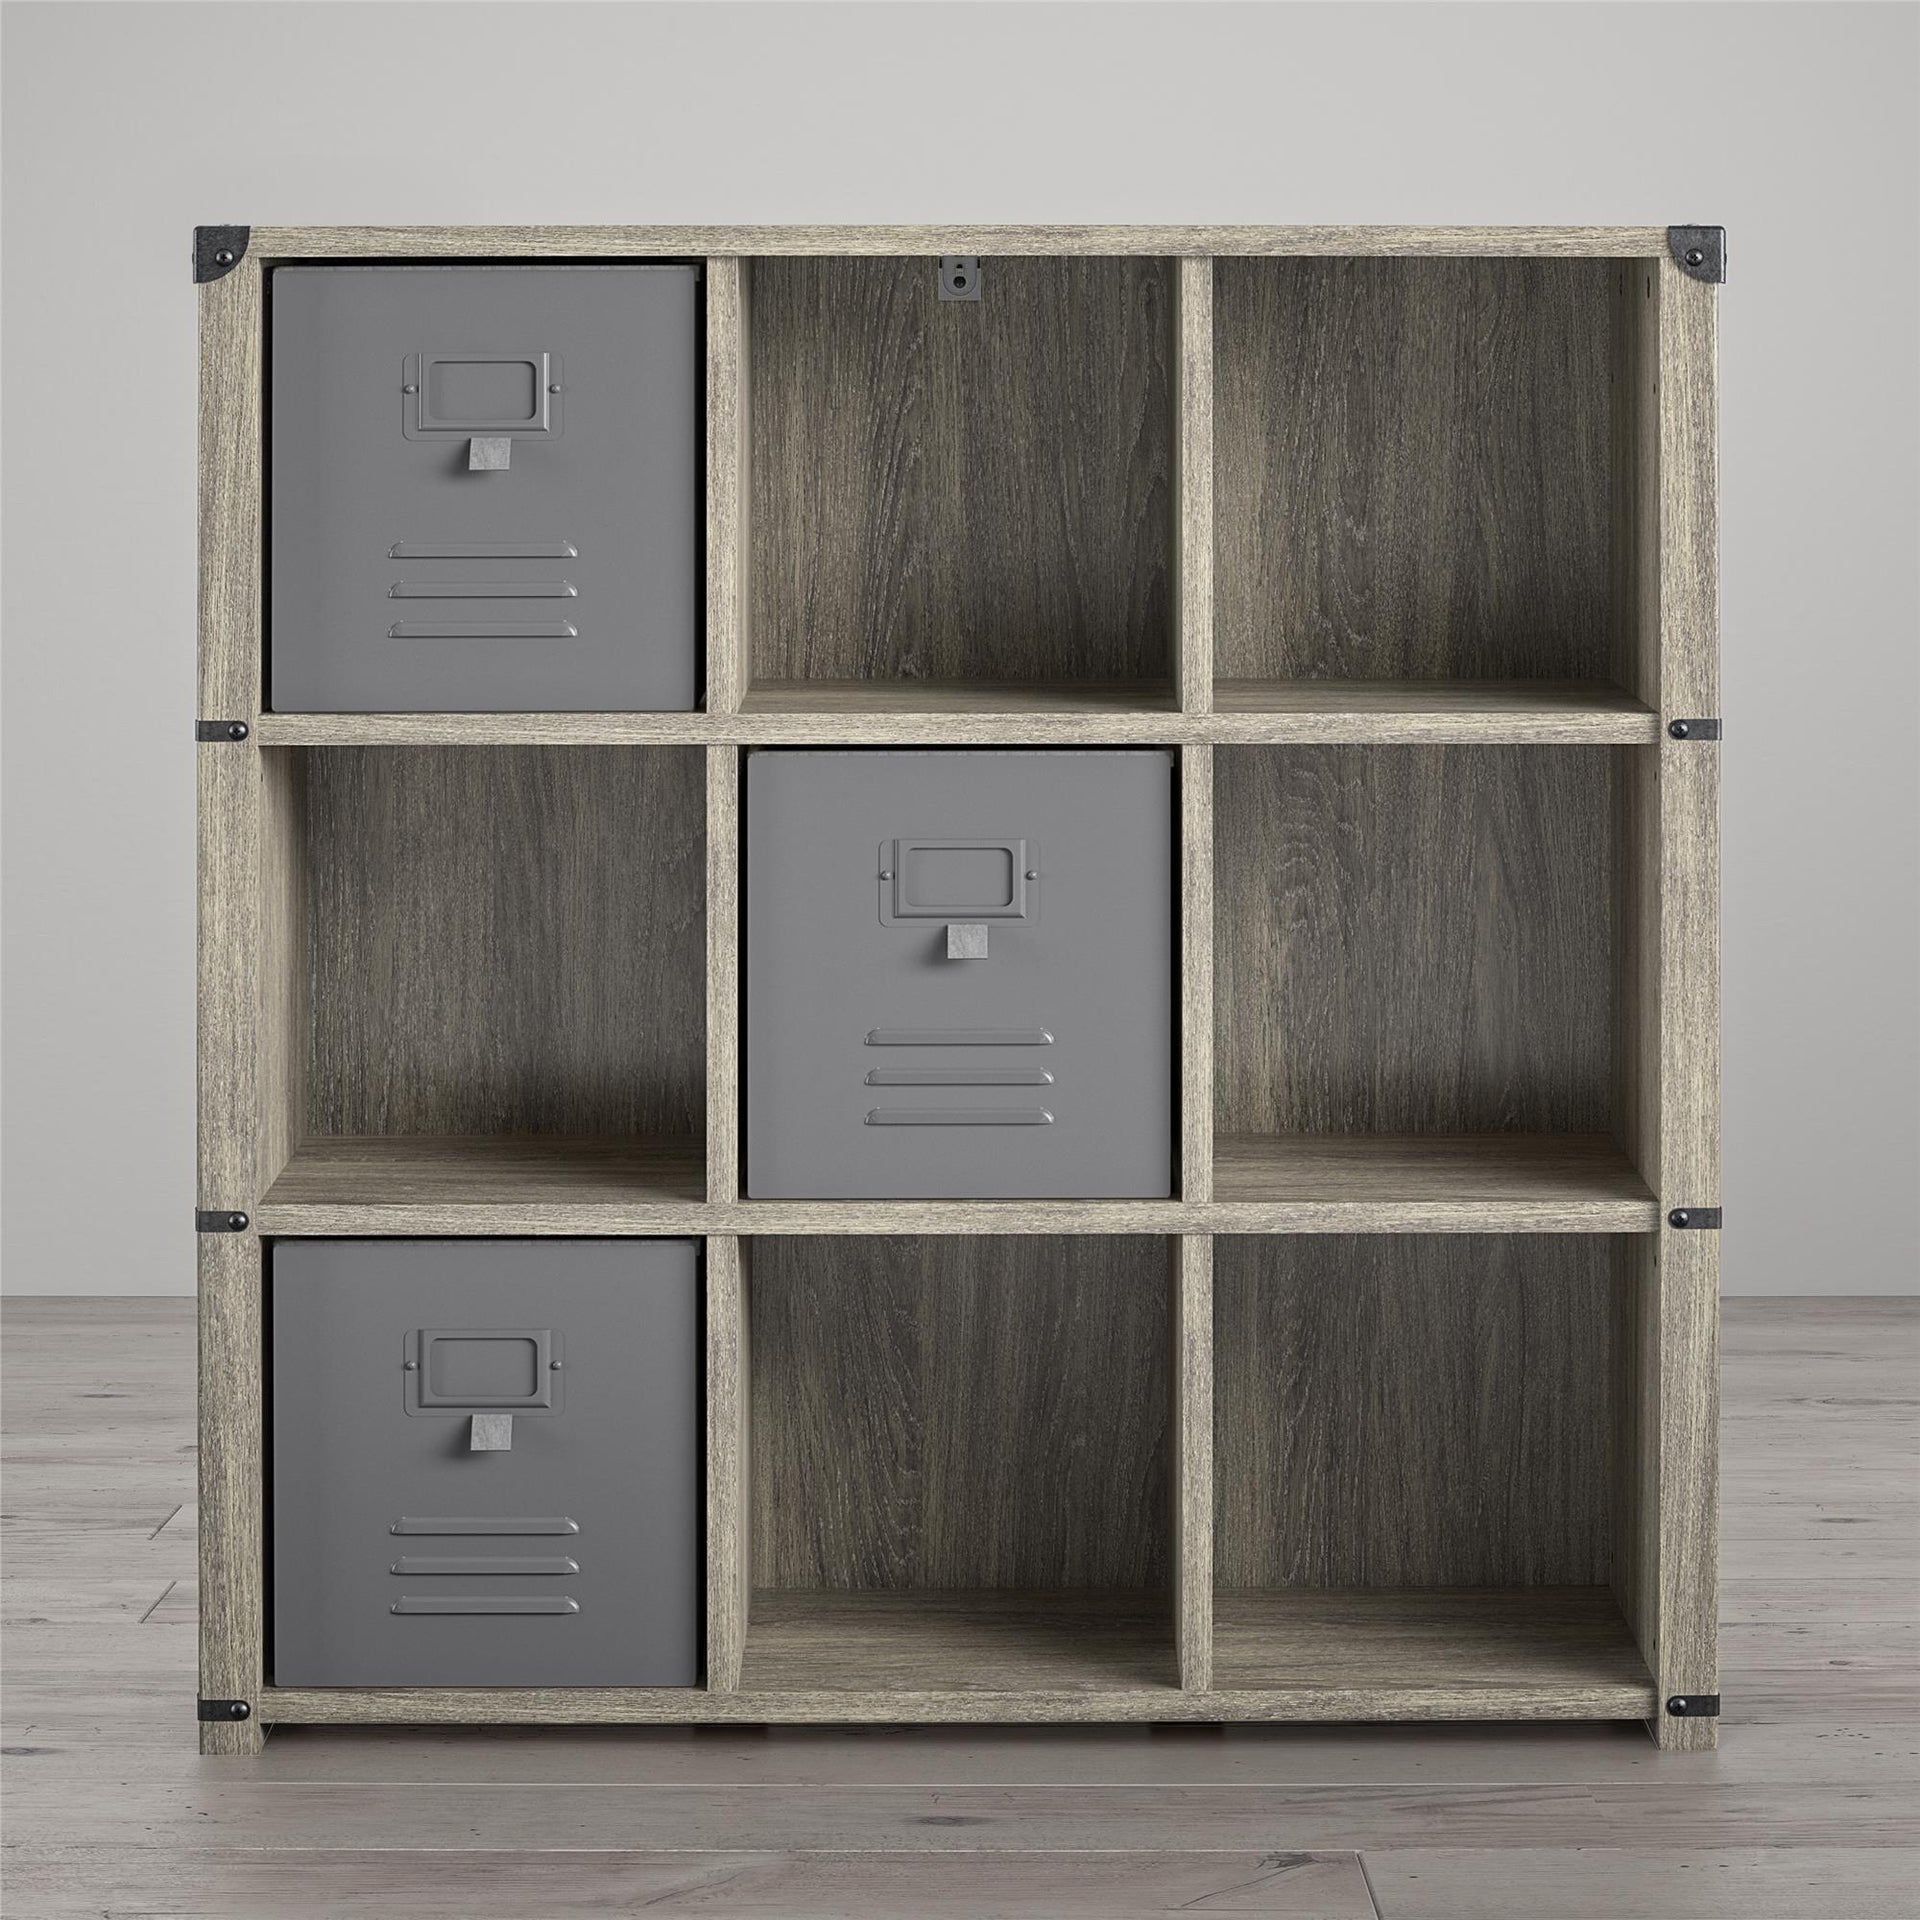 Kitcheniva Book Shelves Storage Organizer 9 Cube Gray, 9 Cube/1